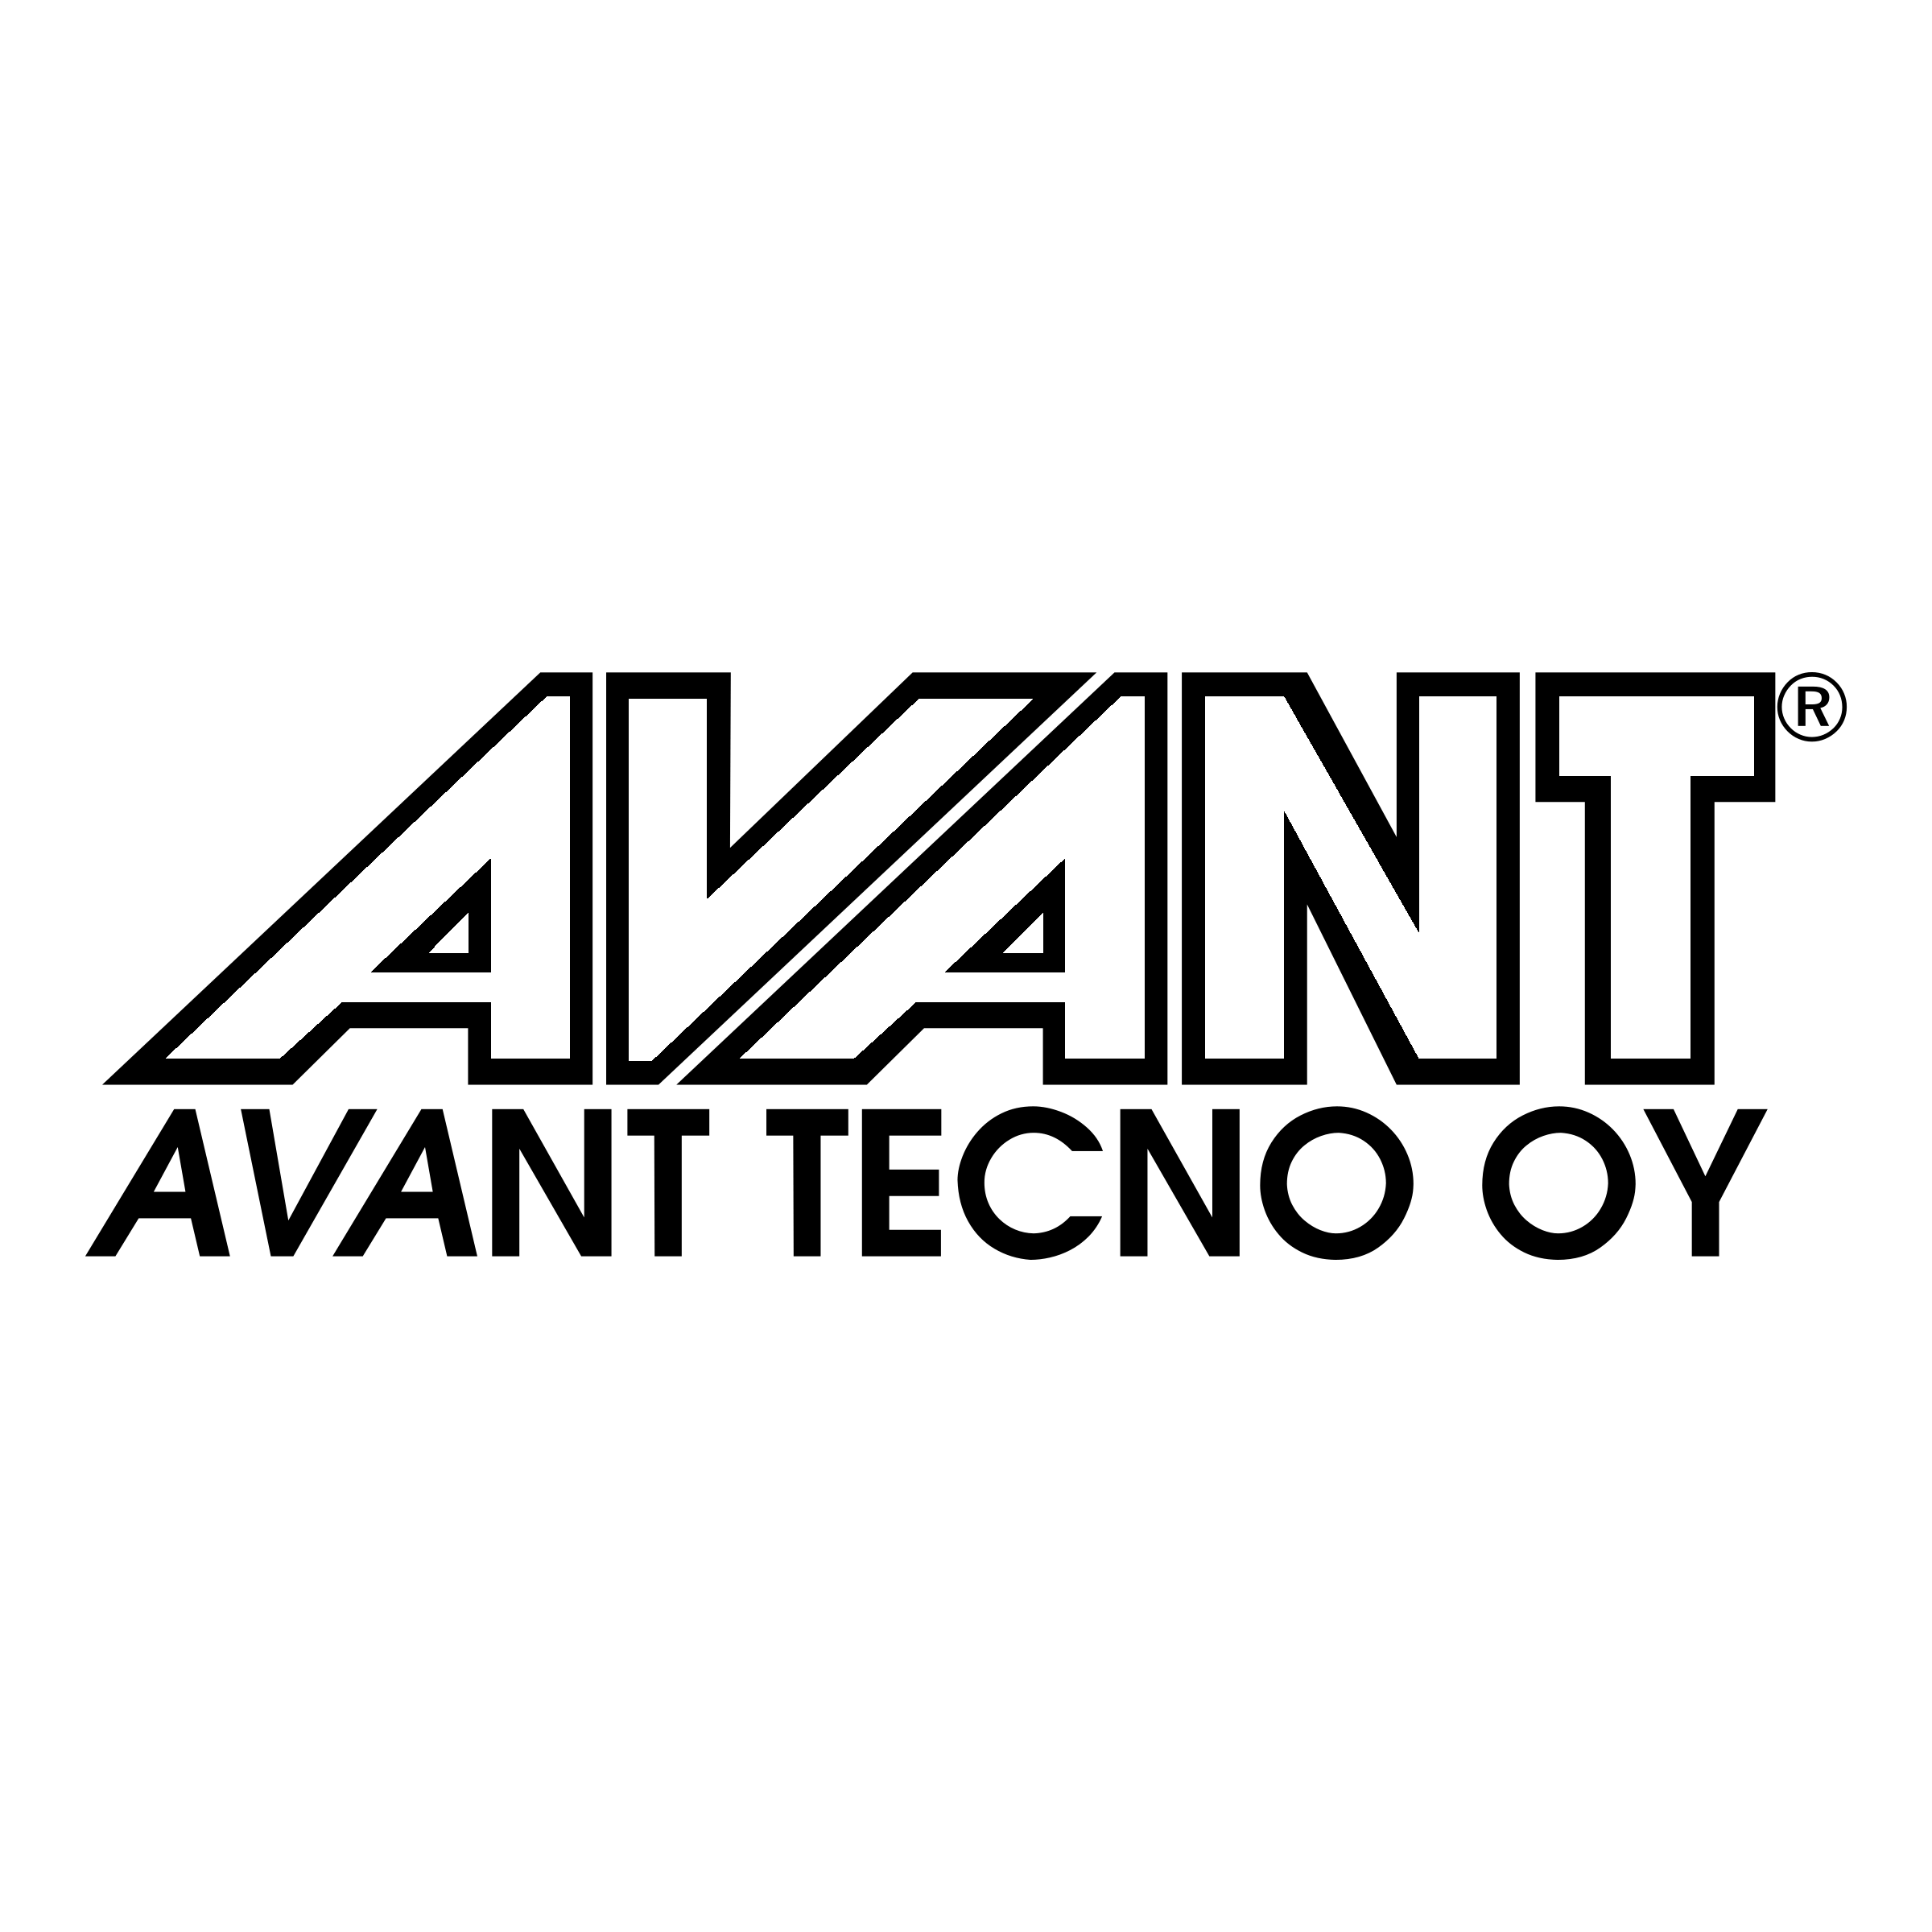 Tenco Logo - Avant Tecno Logo PNG Transparent & SVG Vector - Freebie Supply